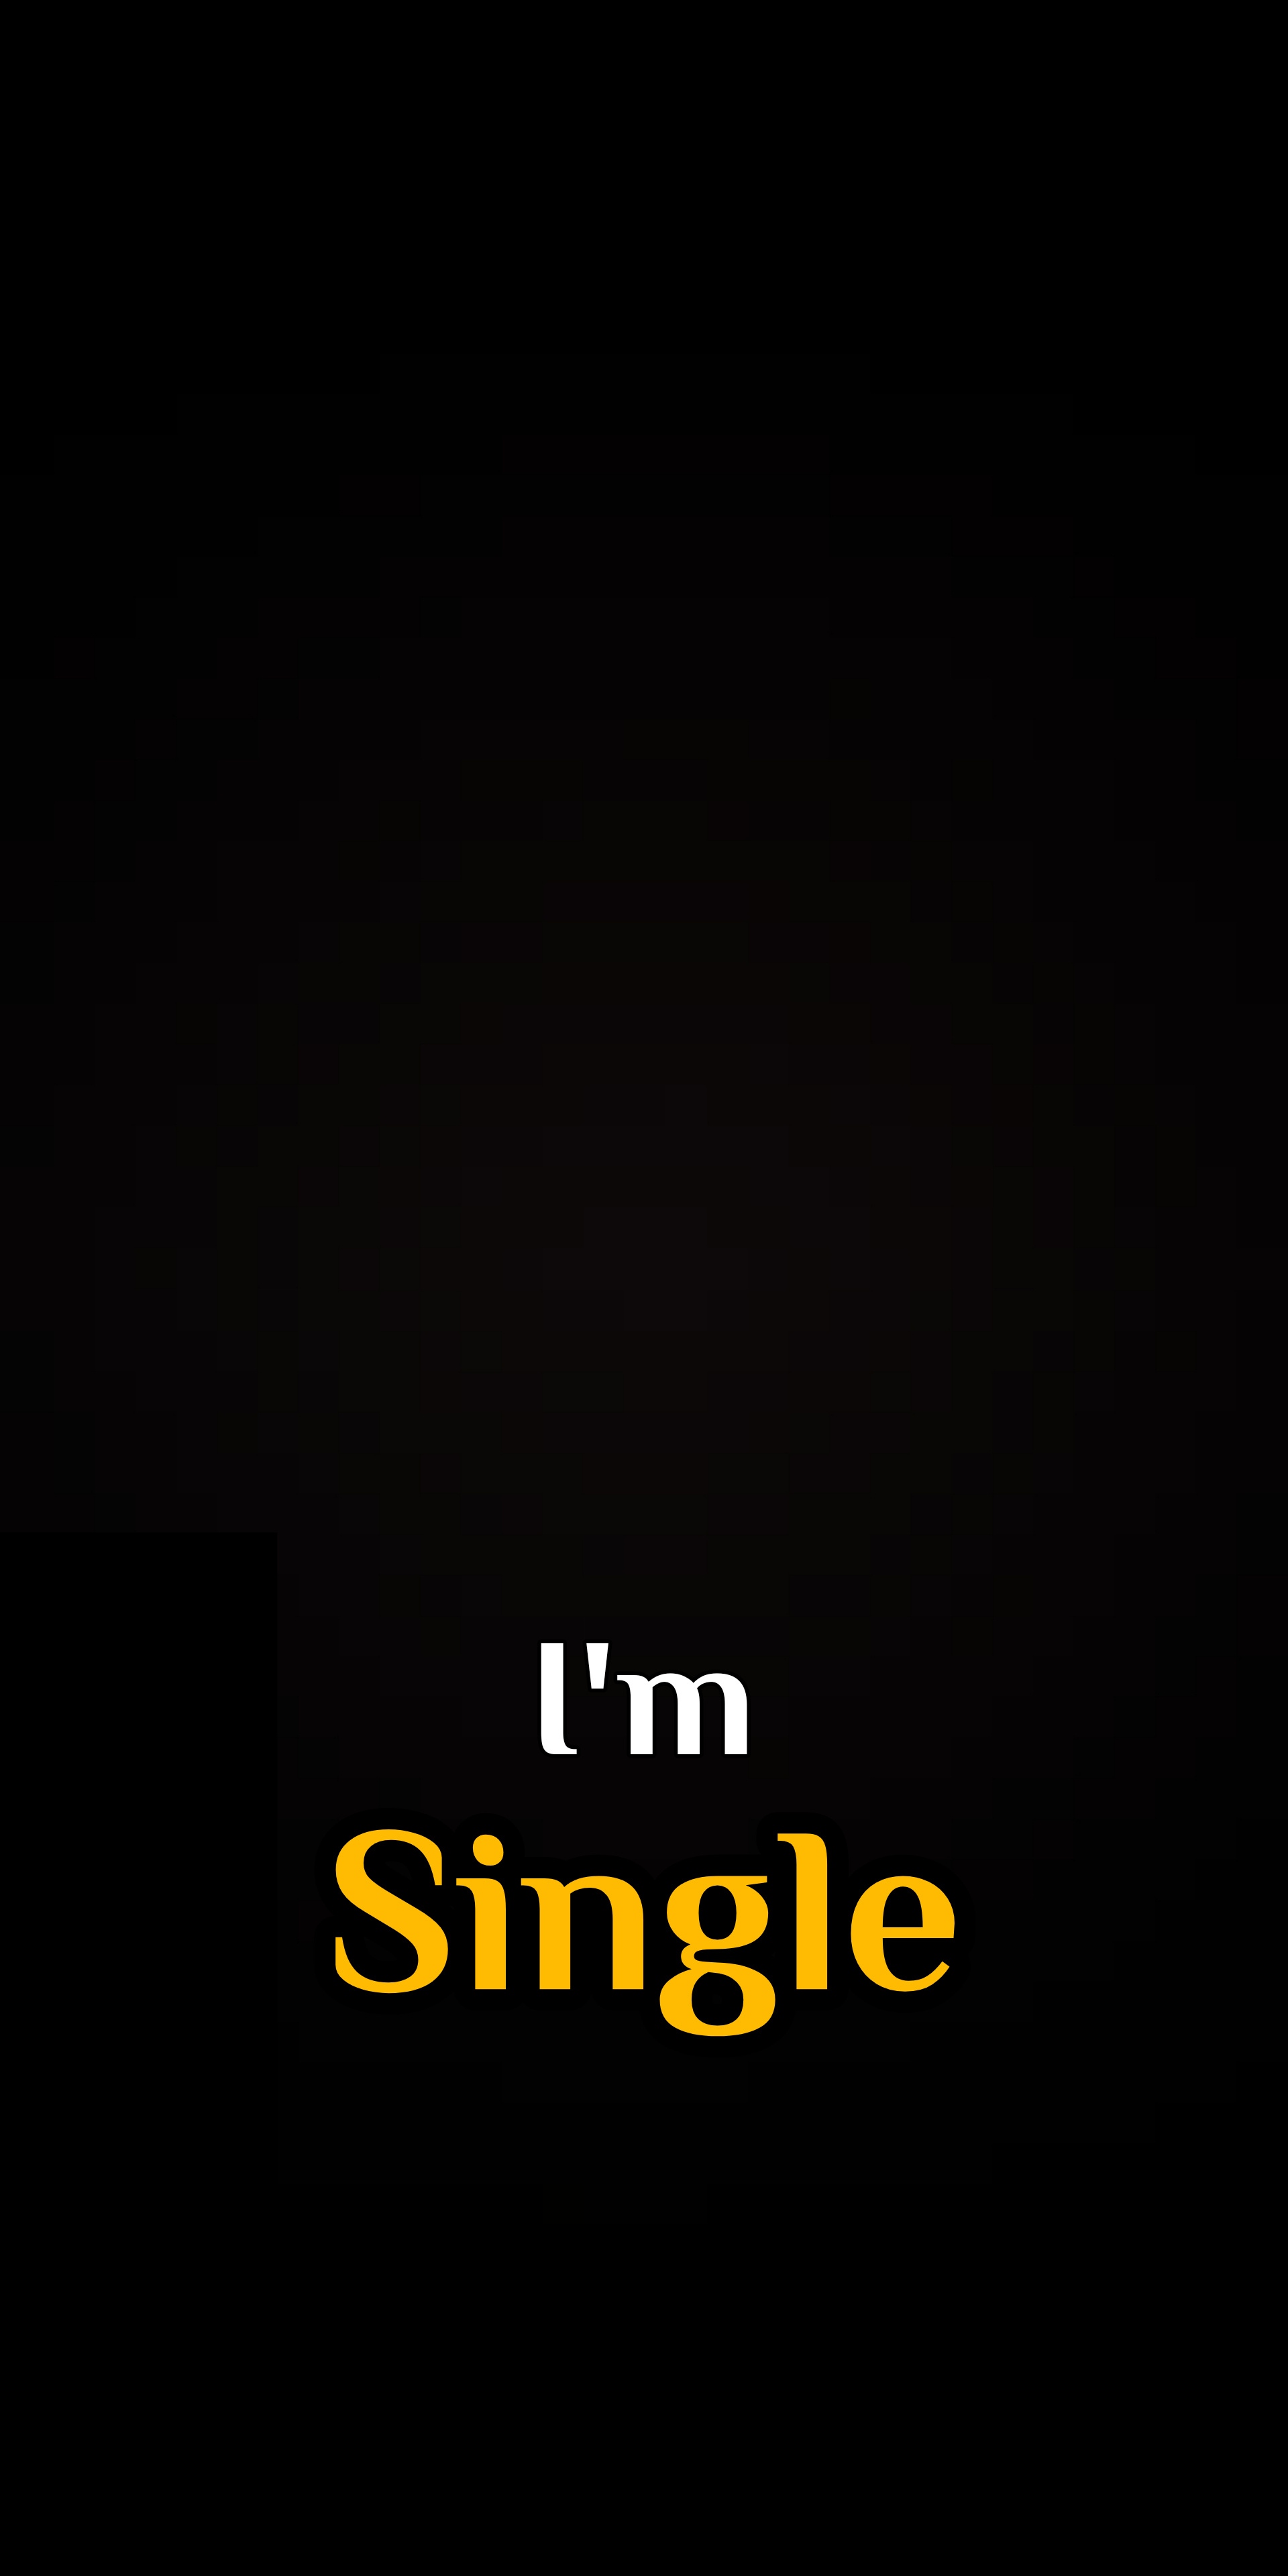 I Am Single - White And Yellow